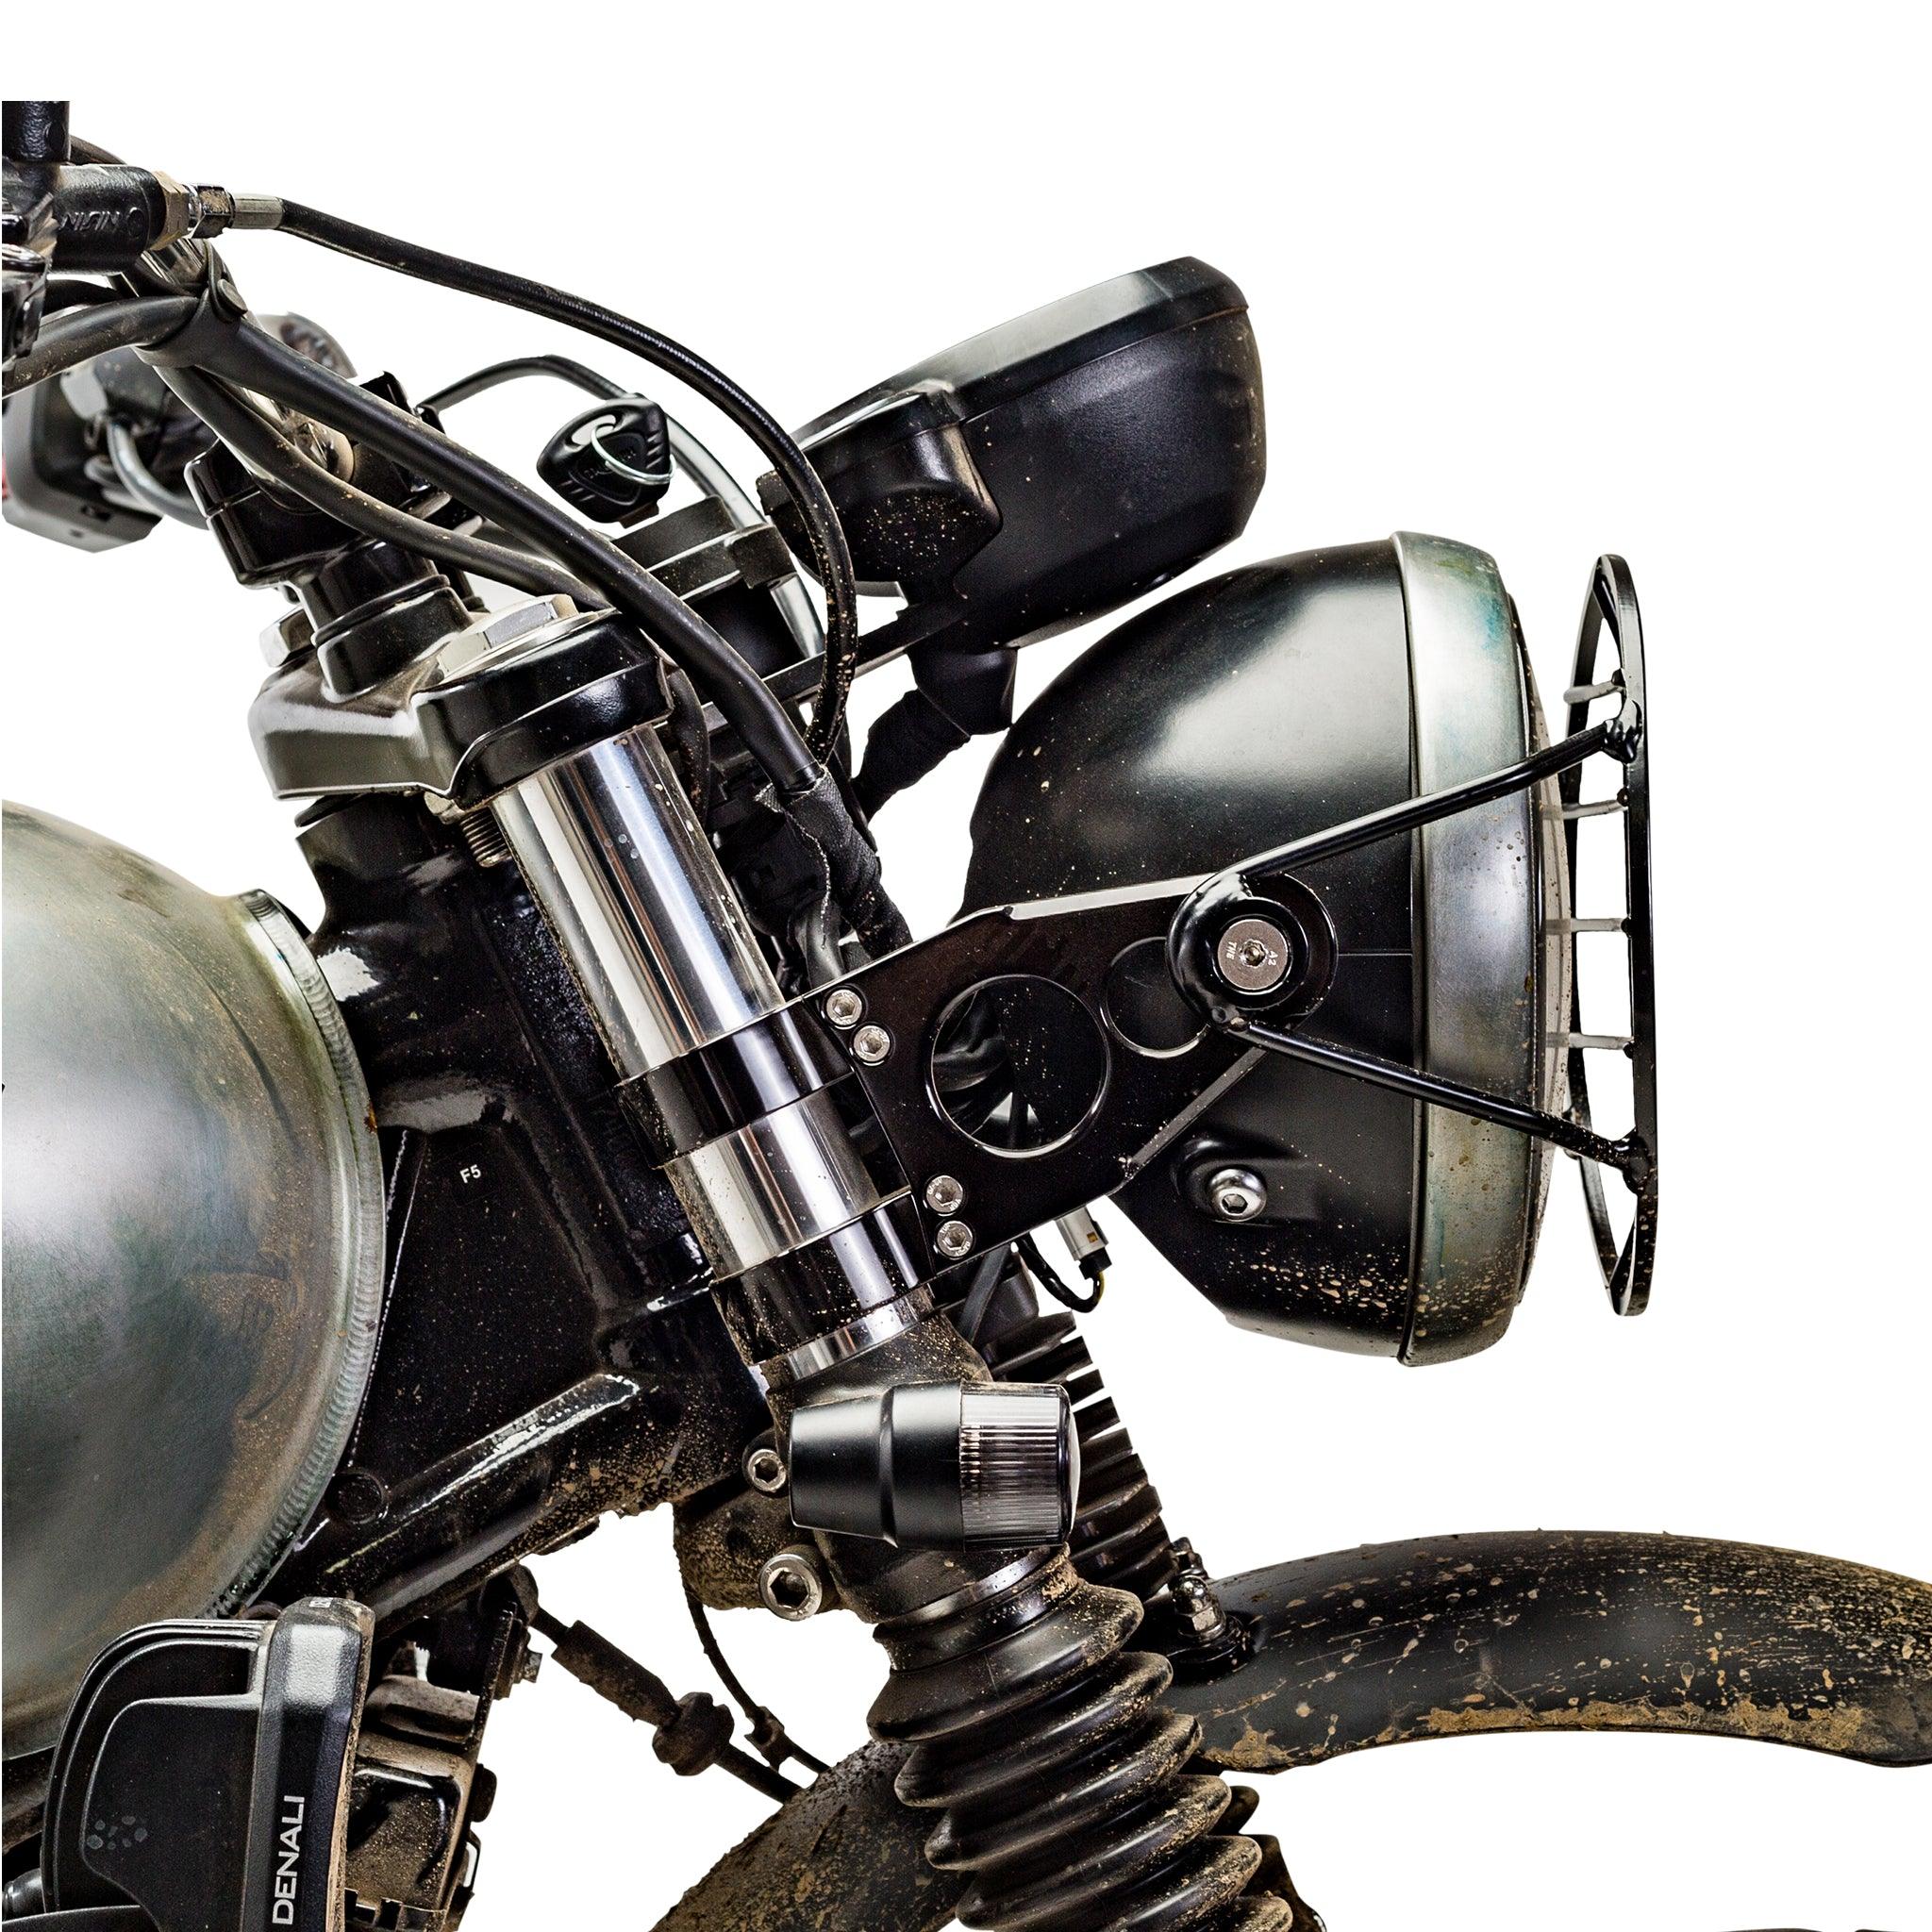 Headlight Guard for Triumph Motorcycles - British Customs